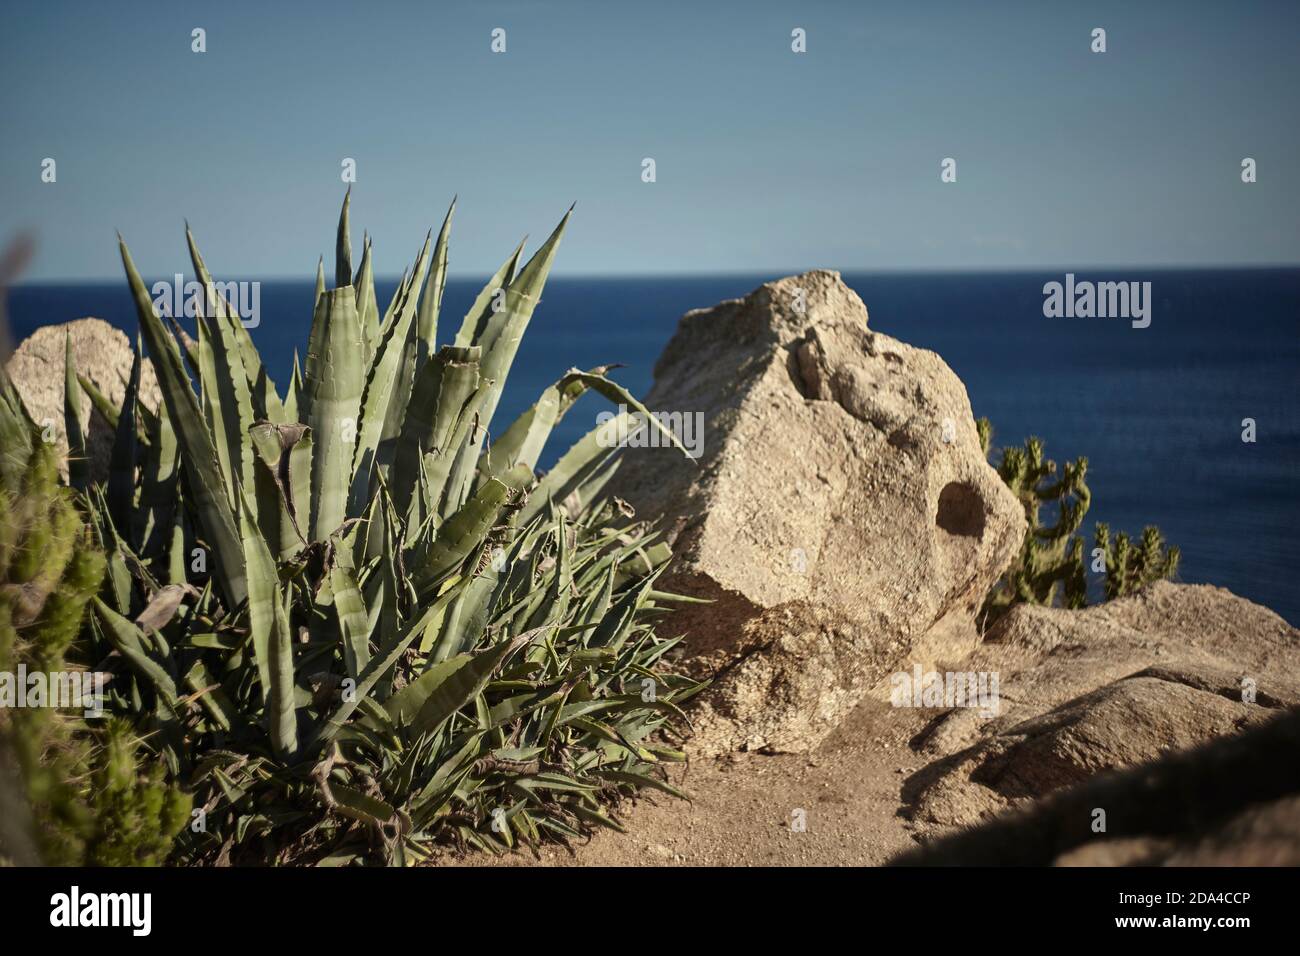 Detail of an aloe vera plant growing near some rocks near the sea. Stock Photo